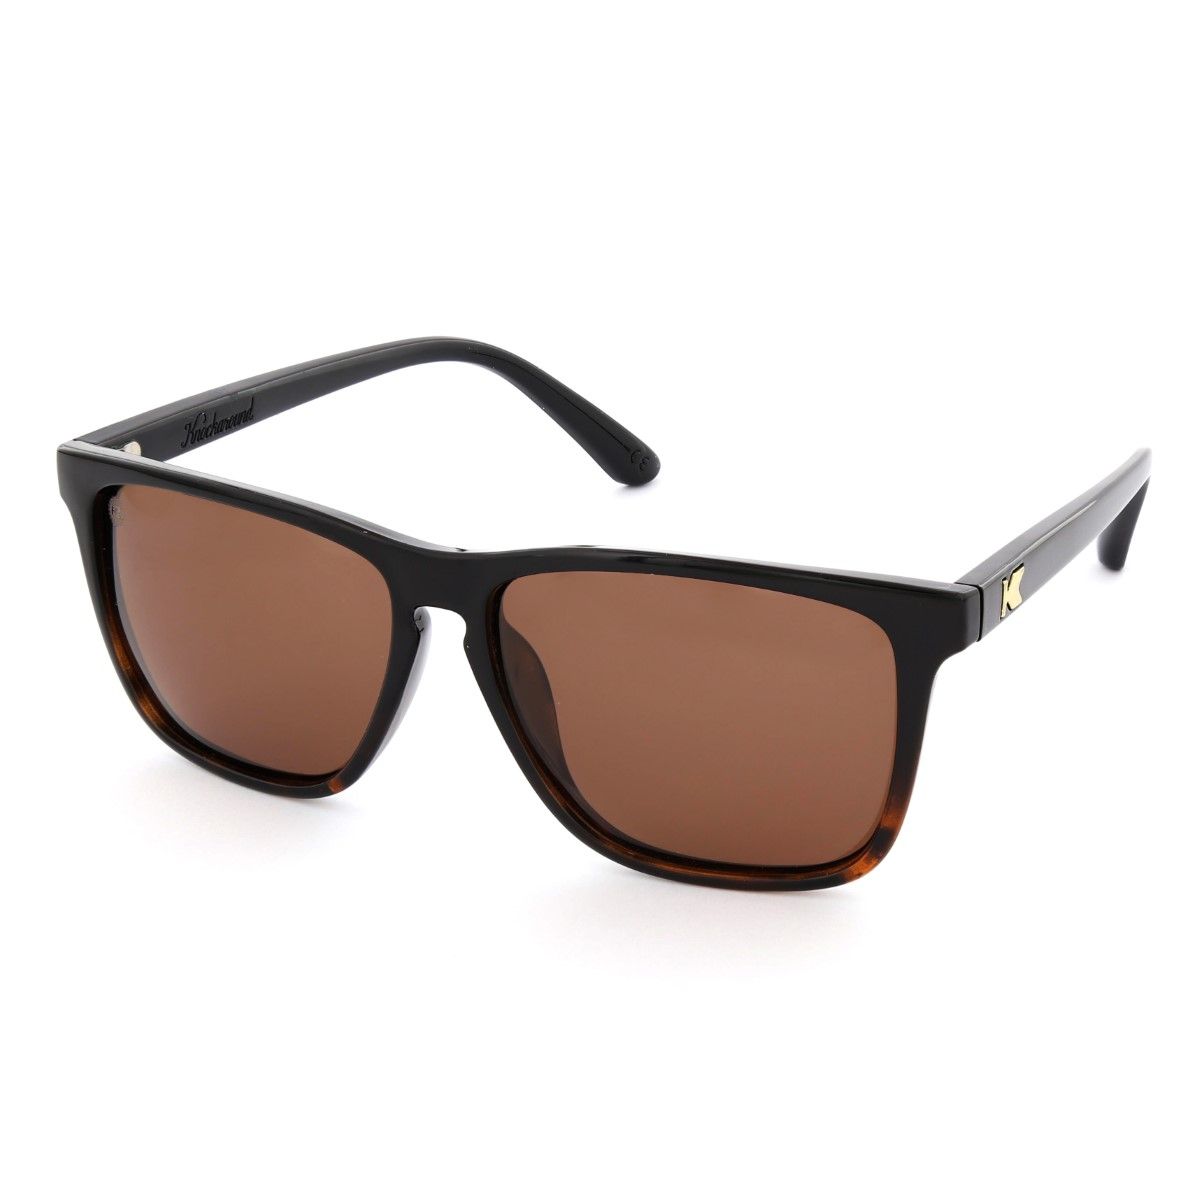 Knockaround Glossy Black And Tortoise Shell Fade/Polarized Amber Fast Lanes Unisex Sunglasses